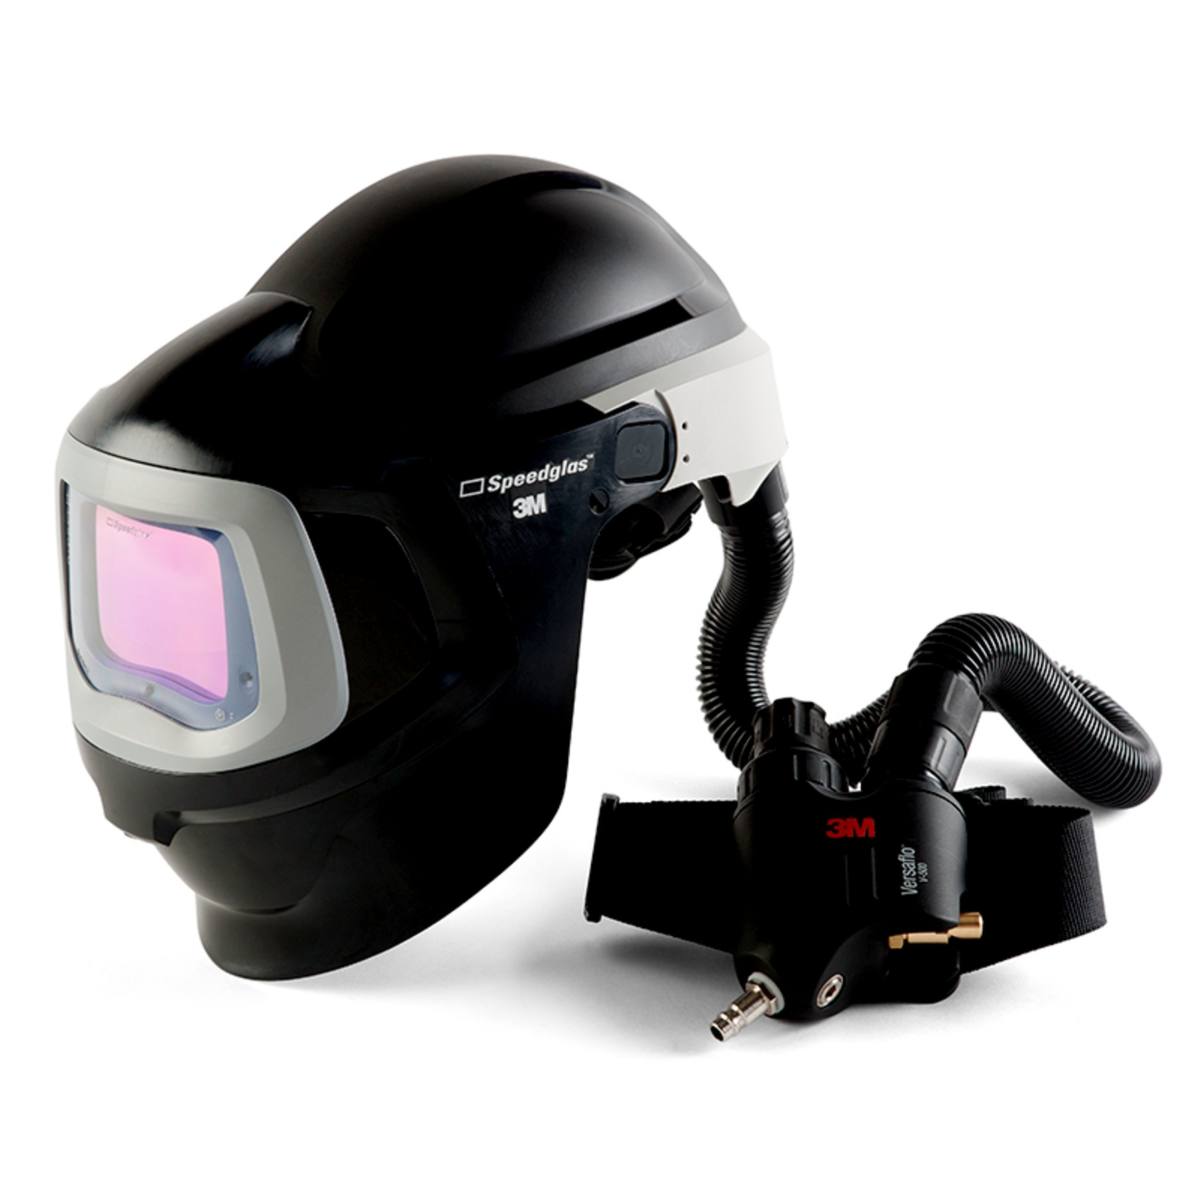 Masque de soudure 3M Speedglas 9100 MP, avec 9100XXi ADF, avec protection respiratoire à air comprimé Versaflo V-500E, sacoche incluse 79 01 01 #578826